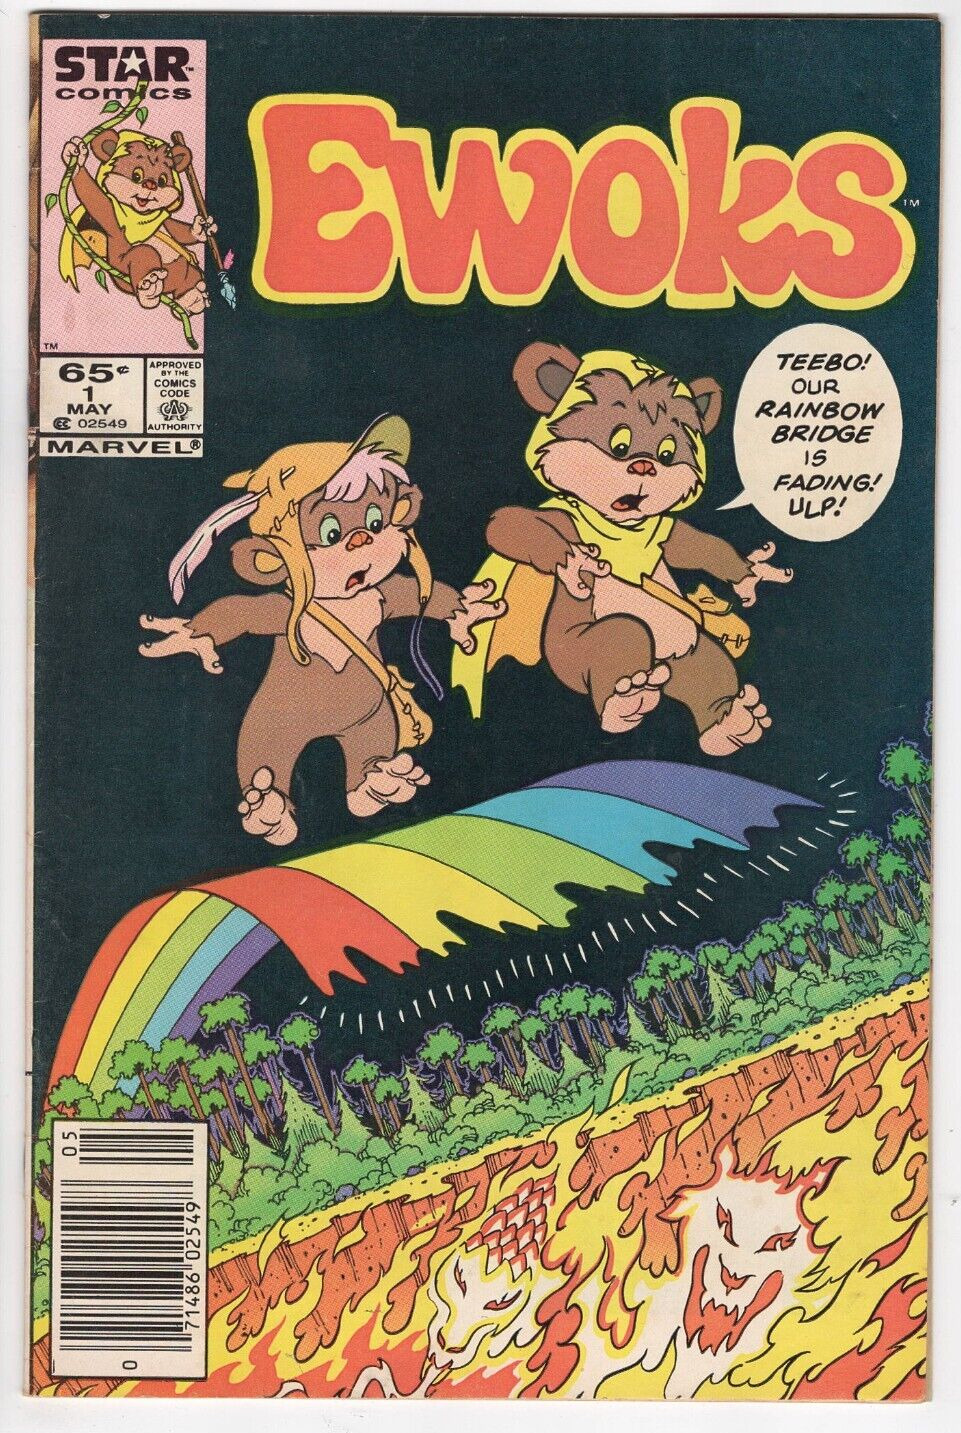 Marvel Comics Ewoks #1 (1985) Star Wars Endor Wookie Teebo Wicket Kneesaa